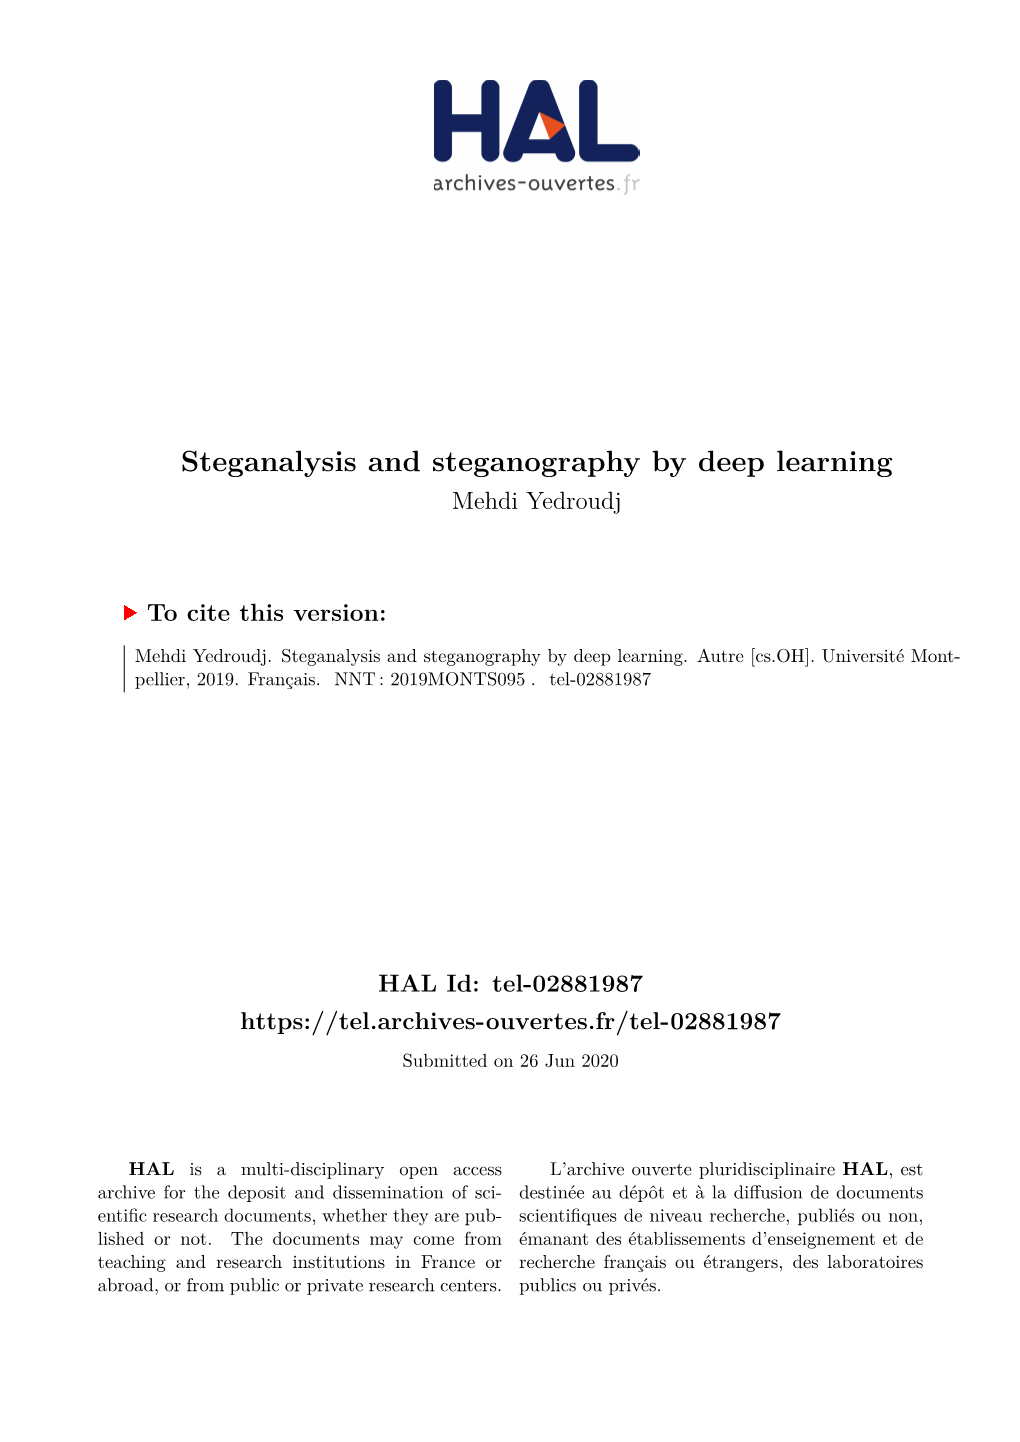 Steganalysis and Steganography by Deep Learning Mehdi Yedroudj